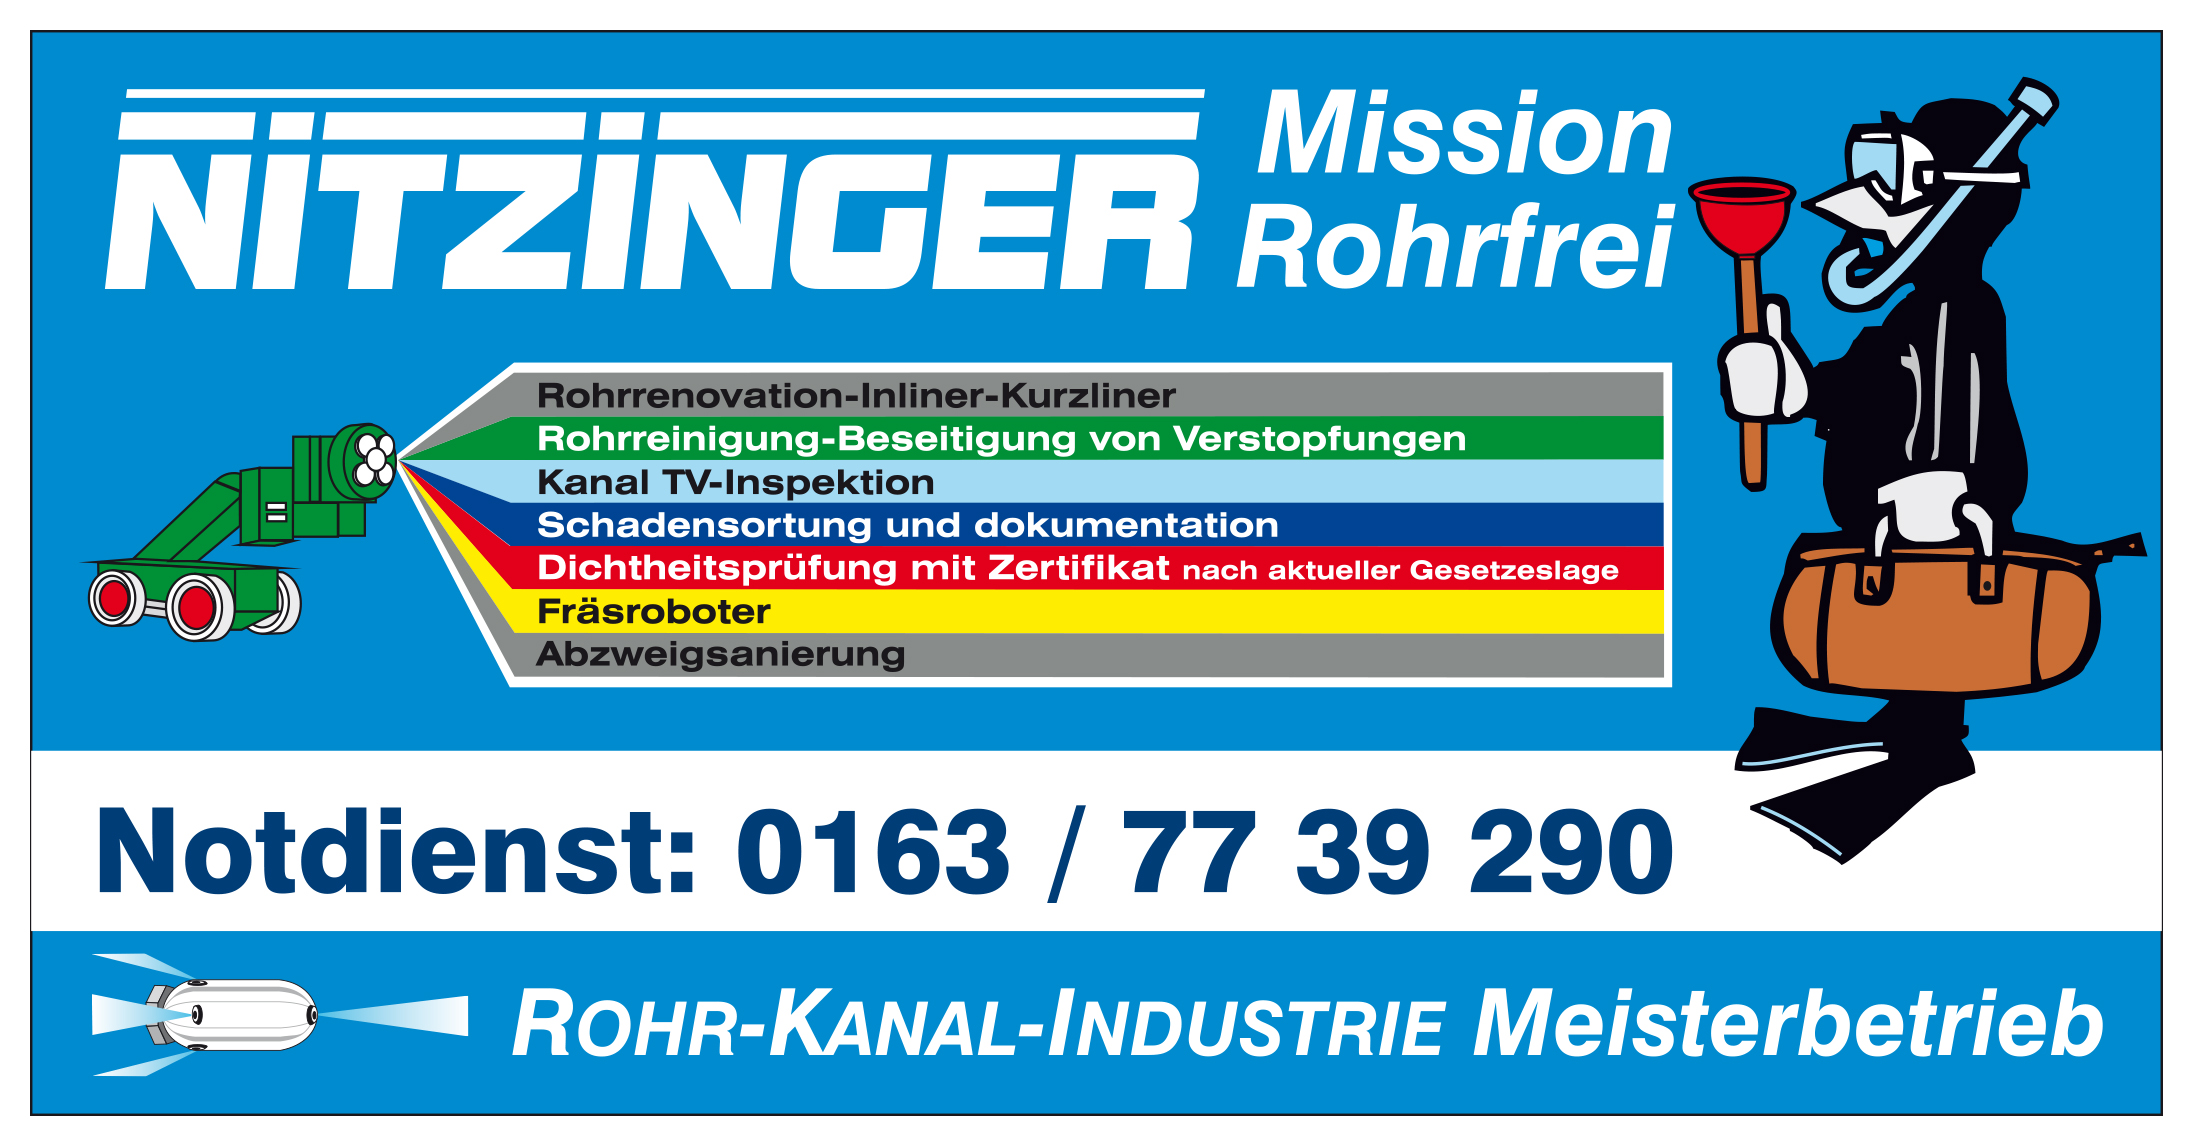 Mission Rohrfrei - Andreas Nitzinger